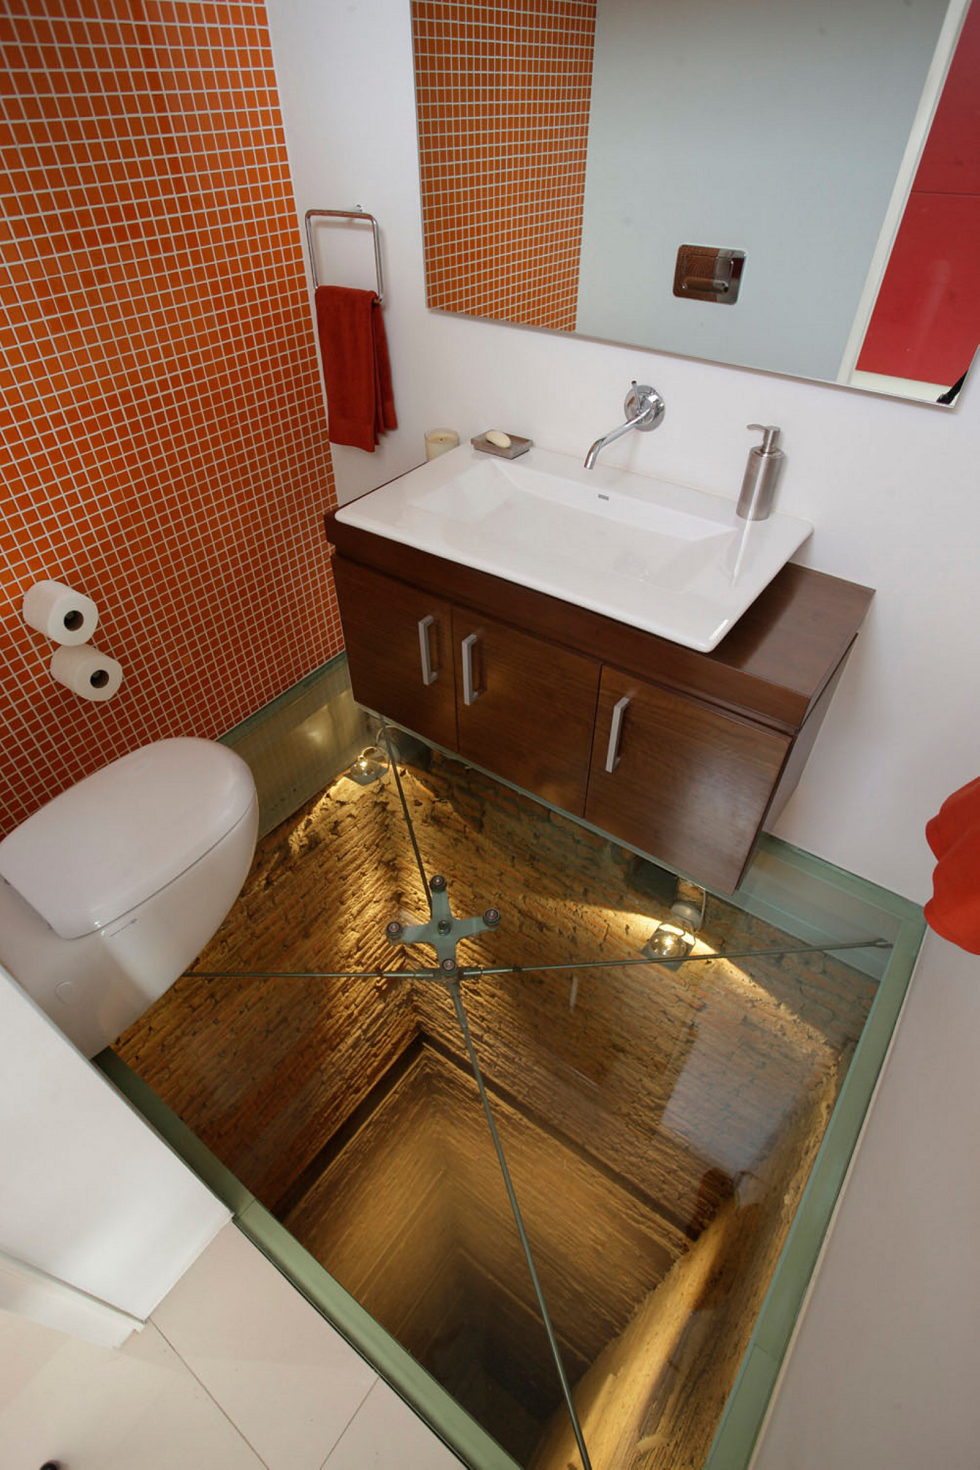 Penthouse with Glass Floor Bathroom, Guadalajara, Mexico - Glass Floor Bathroom